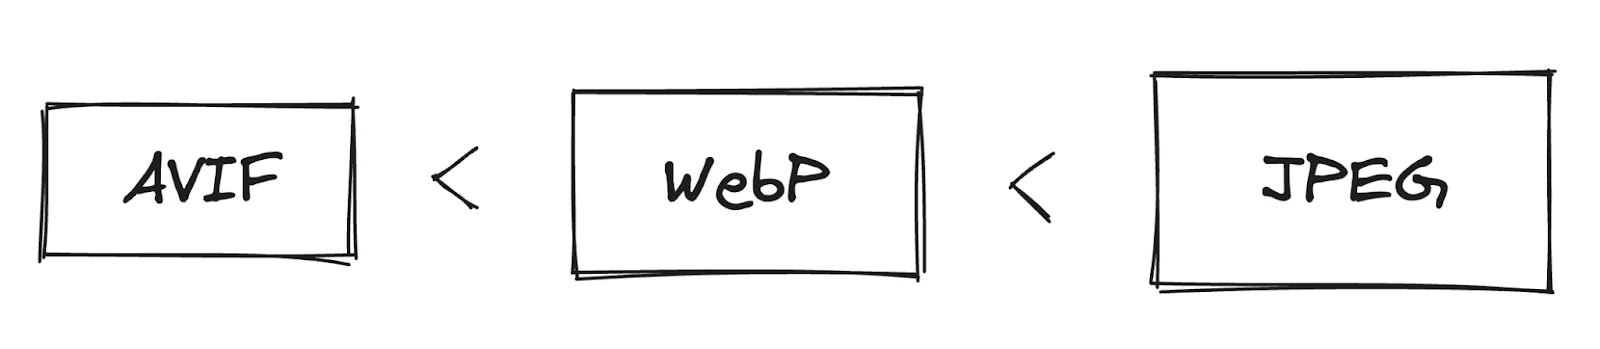 AVIF < WebP < JPEG